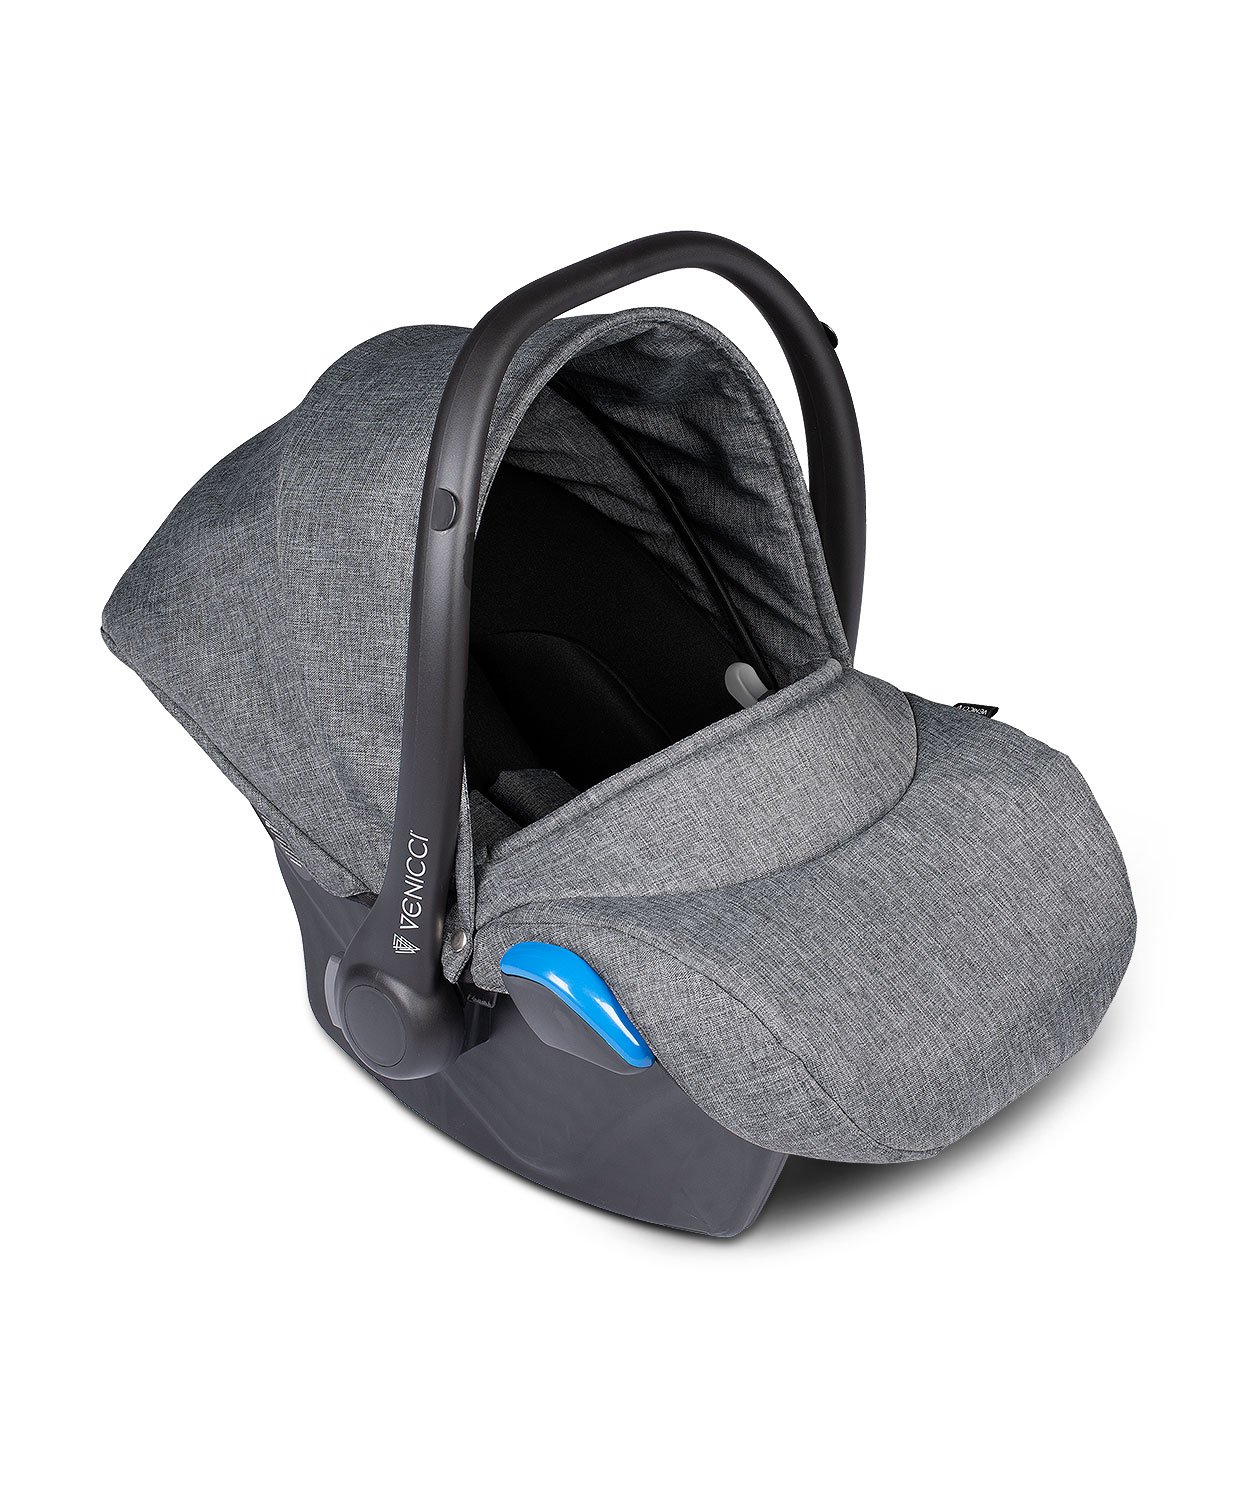 Venicci Car Seat Denim Grey, How To Install Venicci Baby Car Seat With Seatbelt